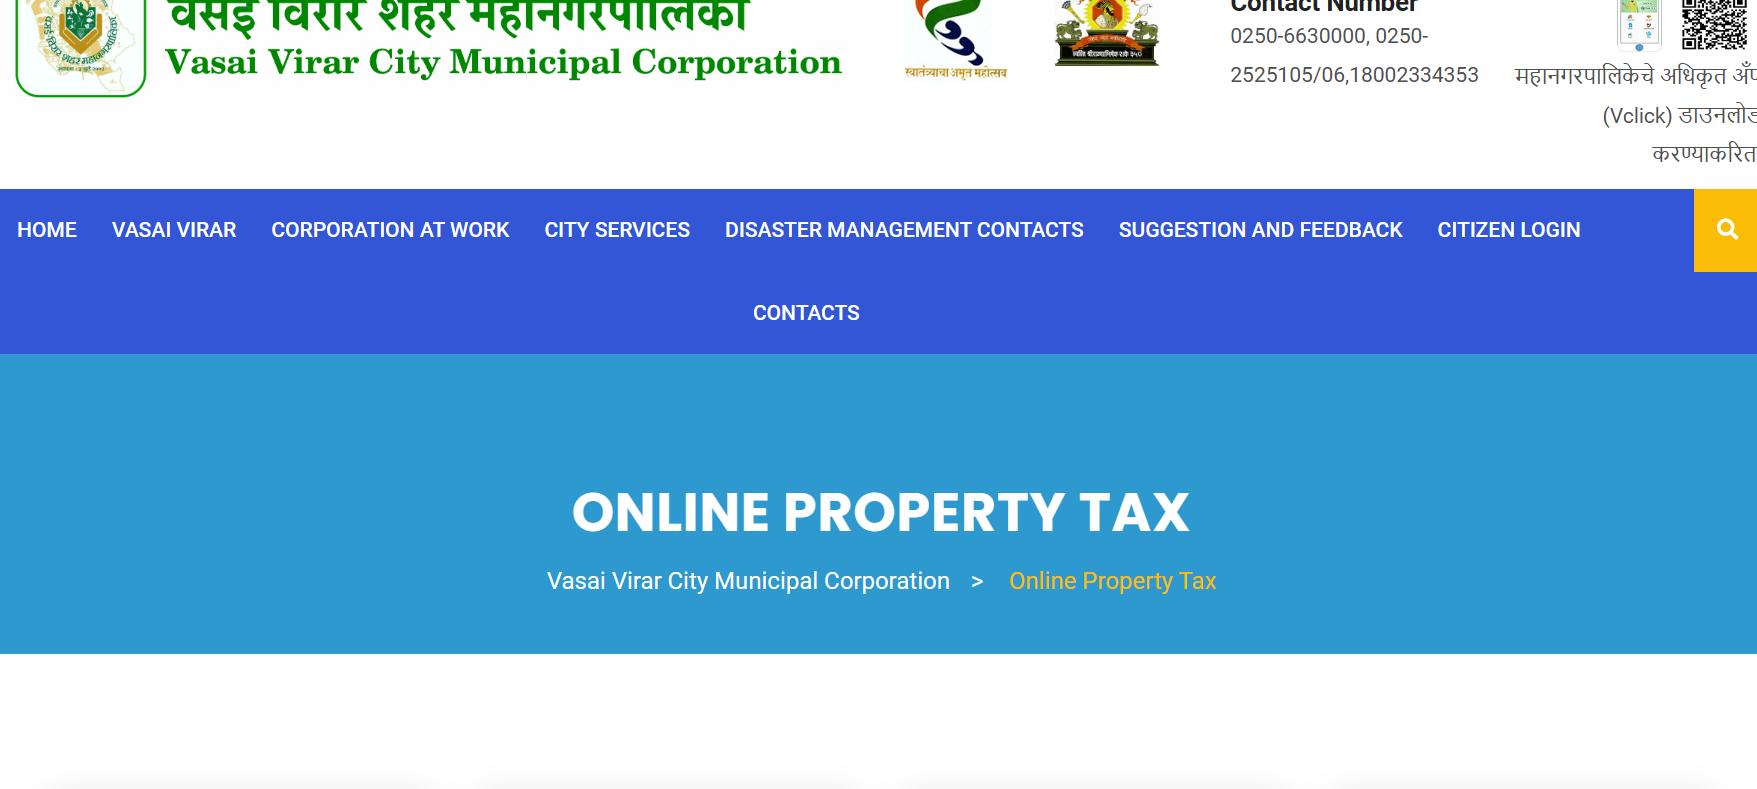 Online Property Tax - vasai.PNG